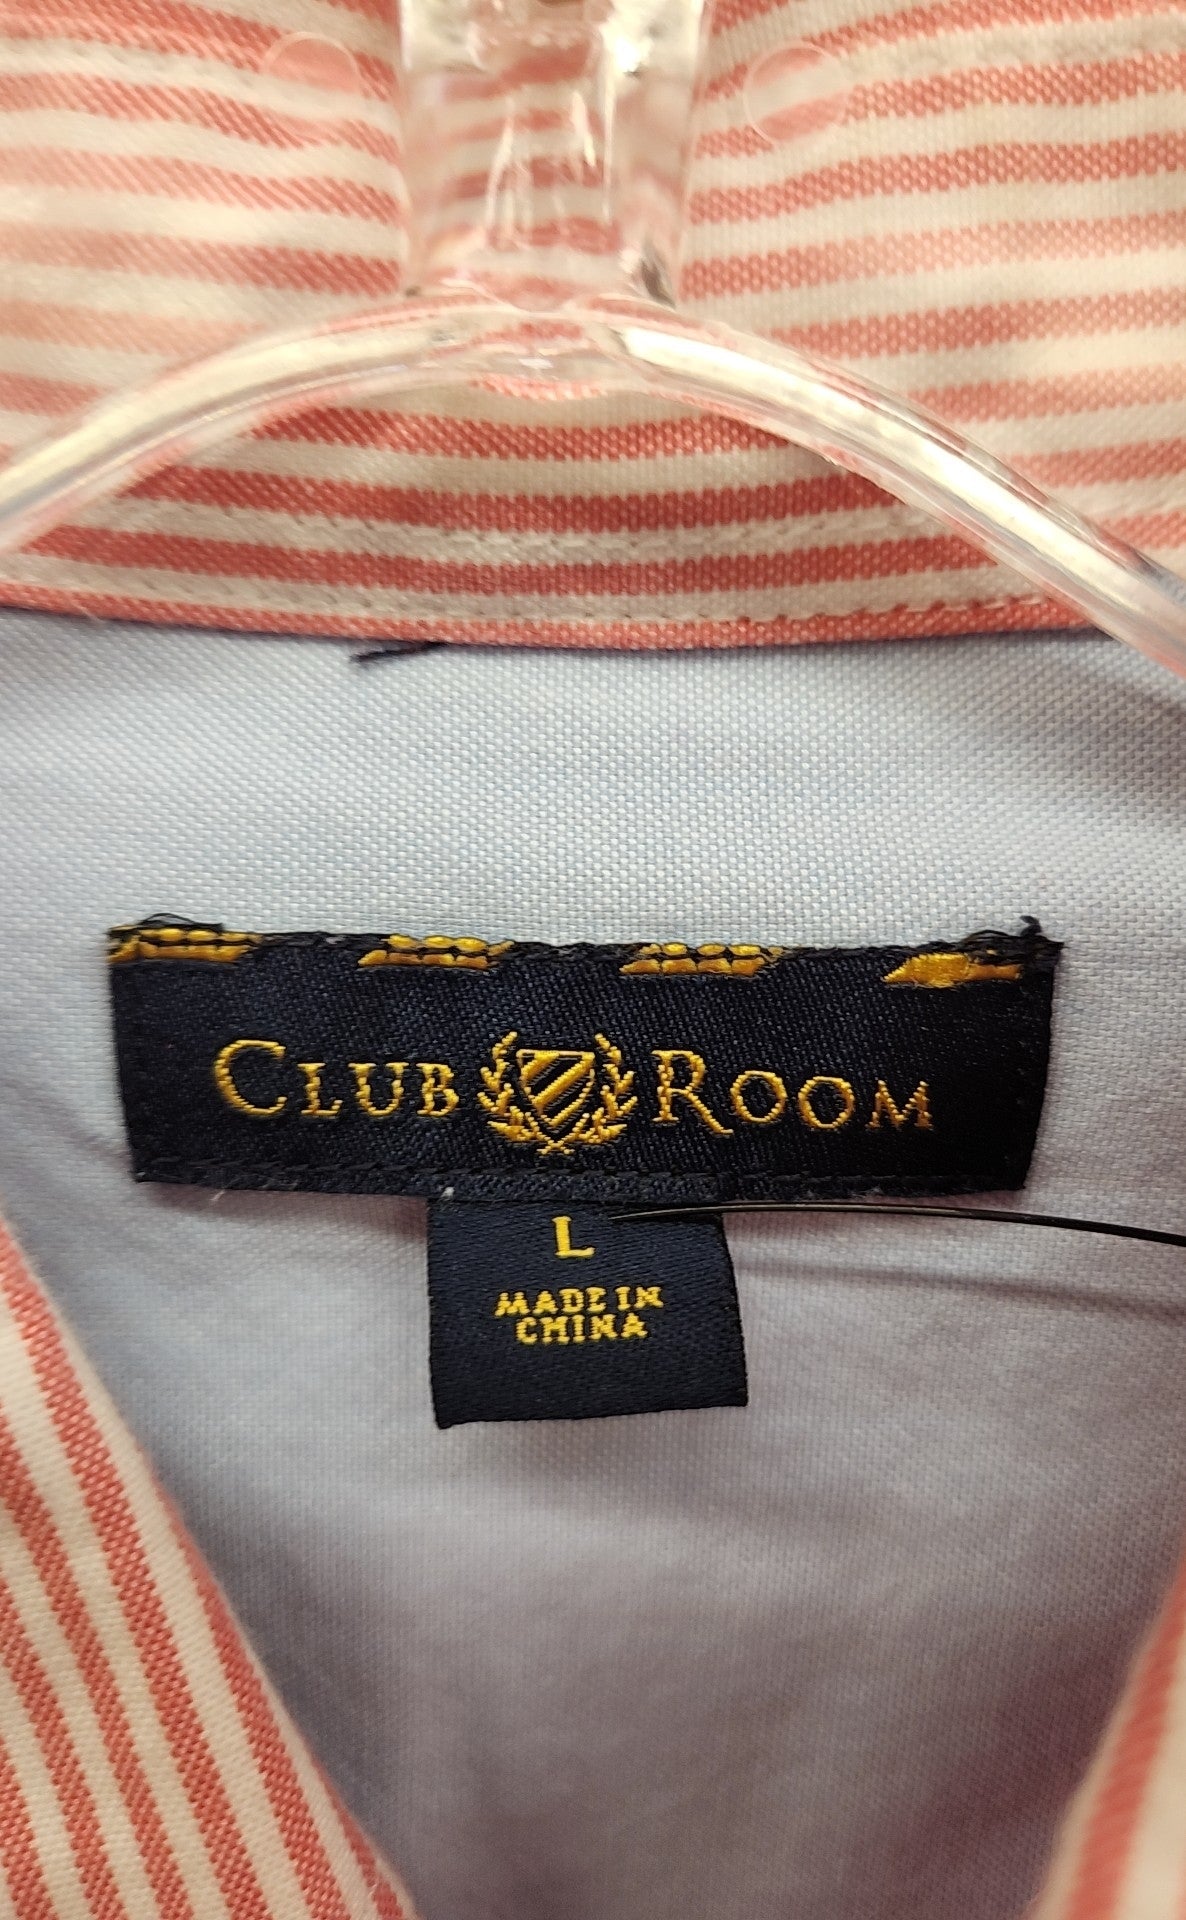 Club Room Men's Size L Red Shirt